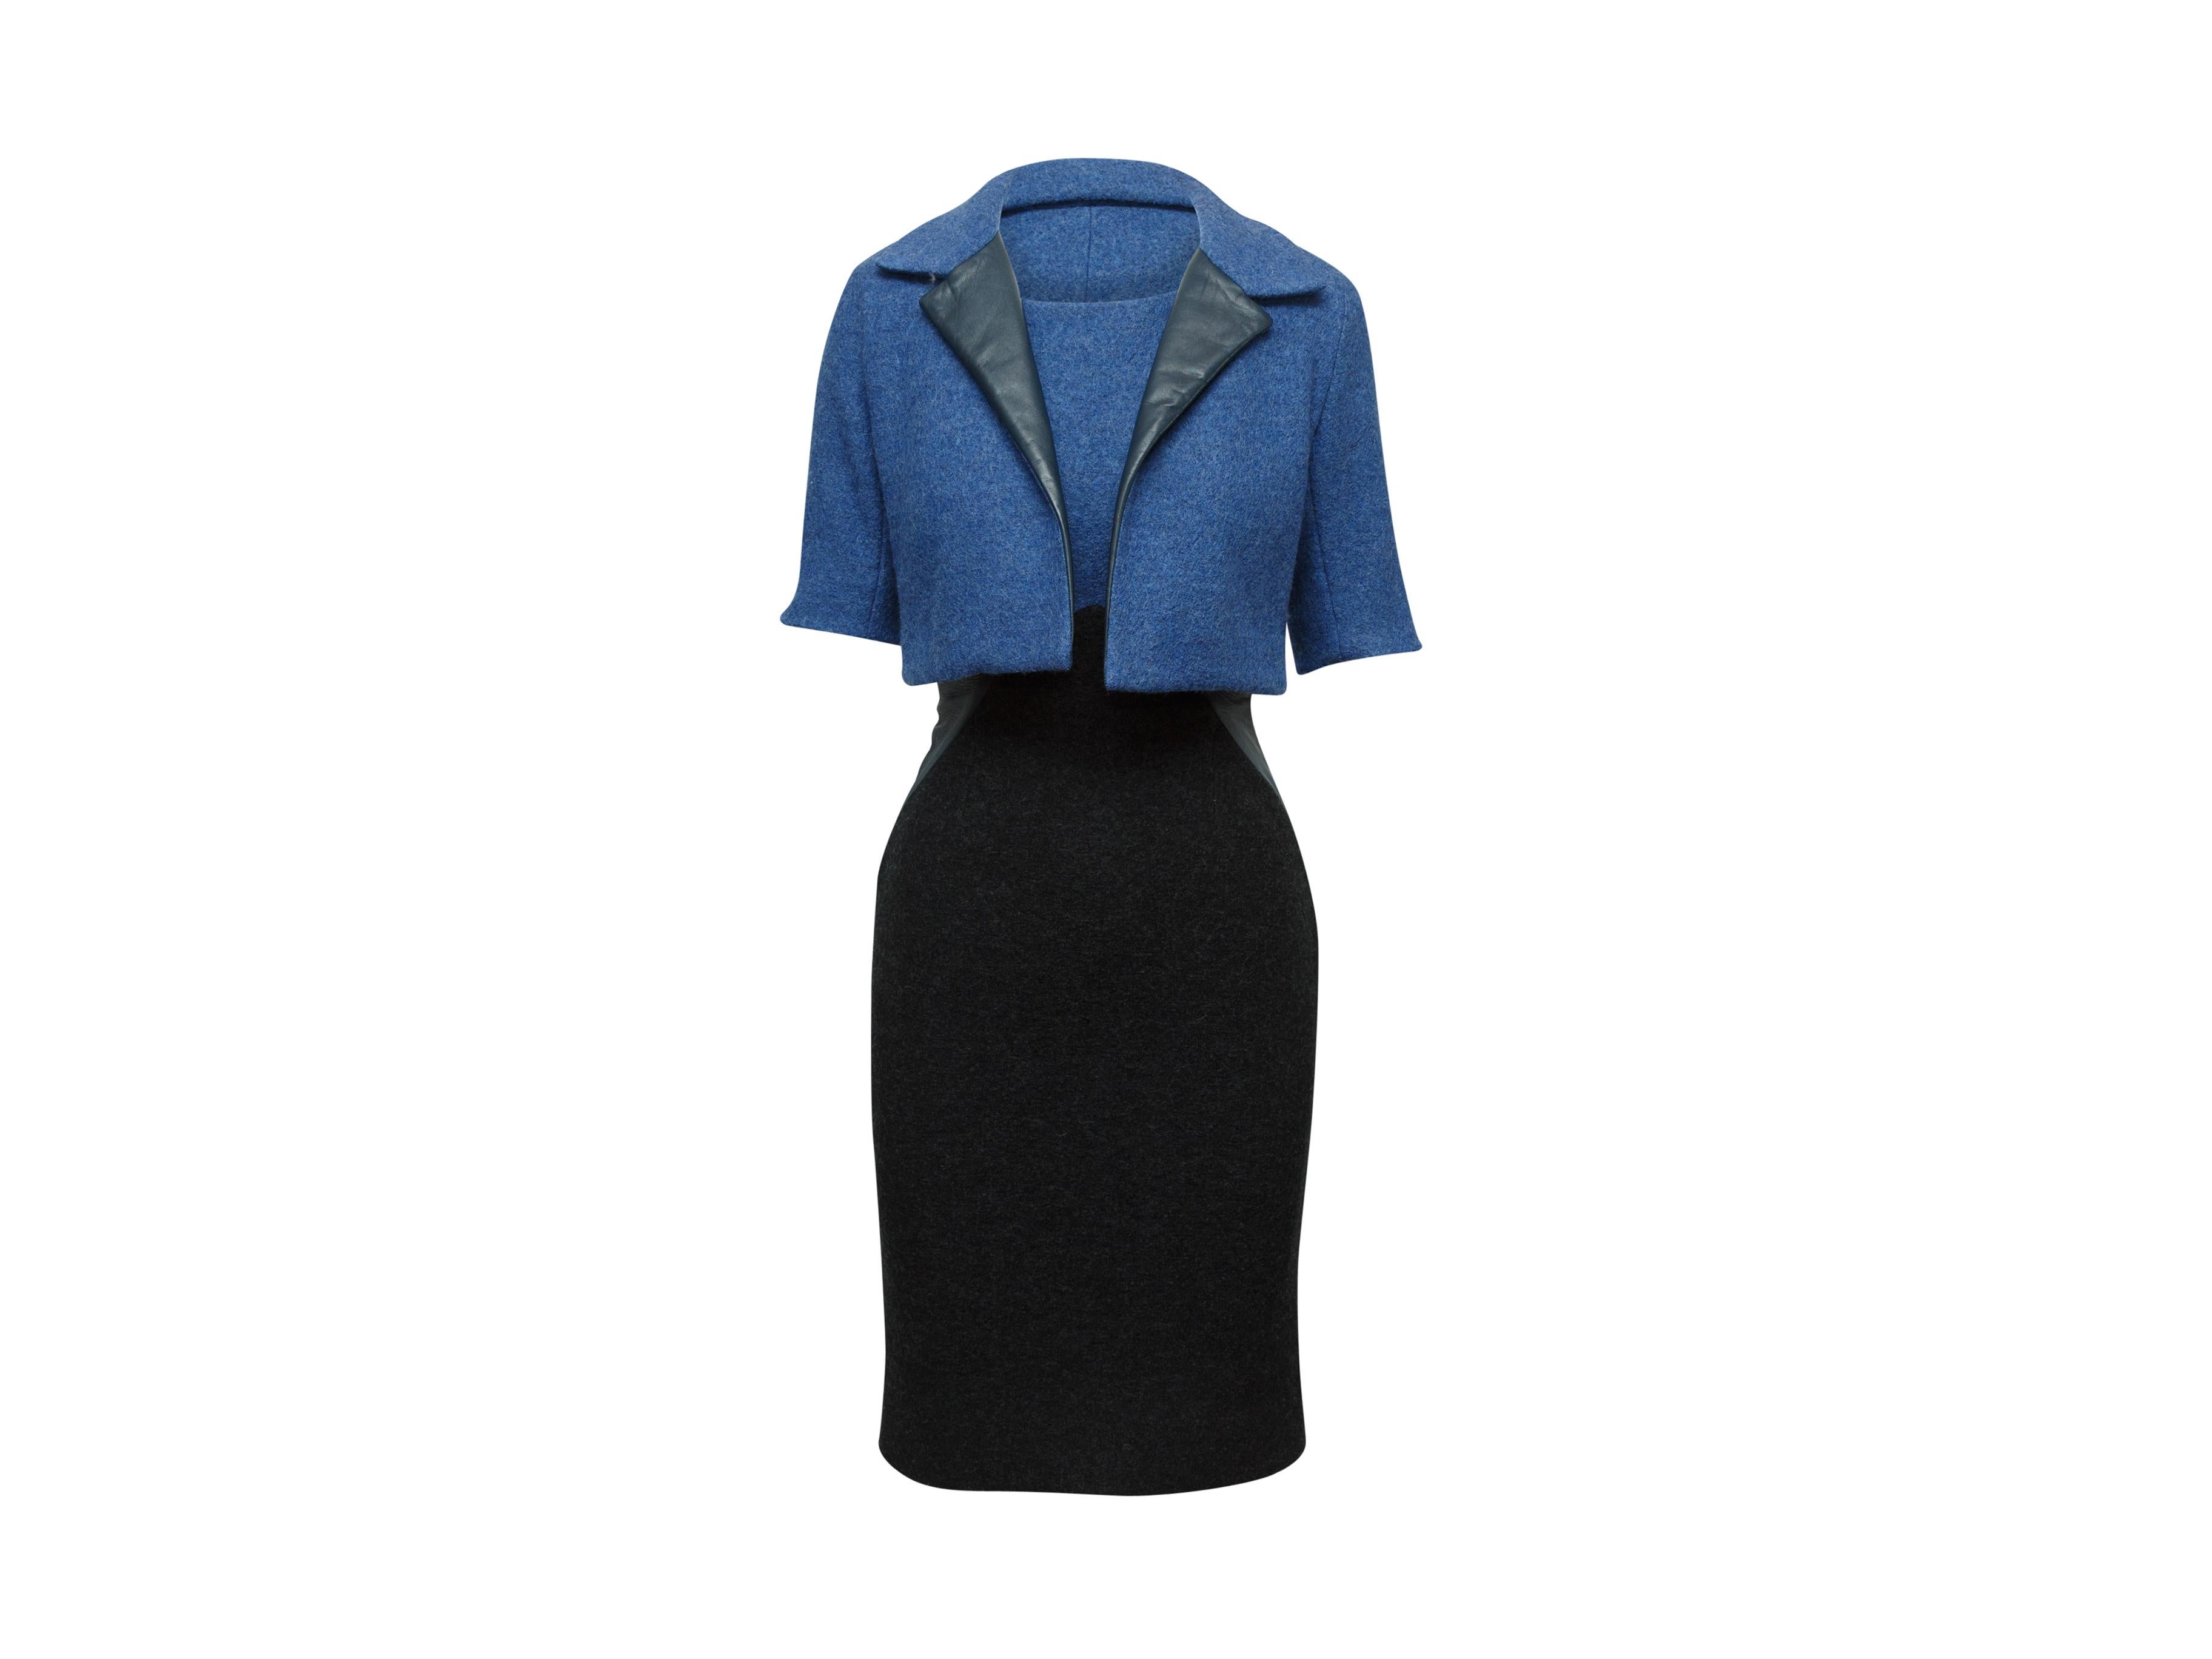 Douglas Hannant Blue & Black Fall/Winter 2014 Dress Set 1